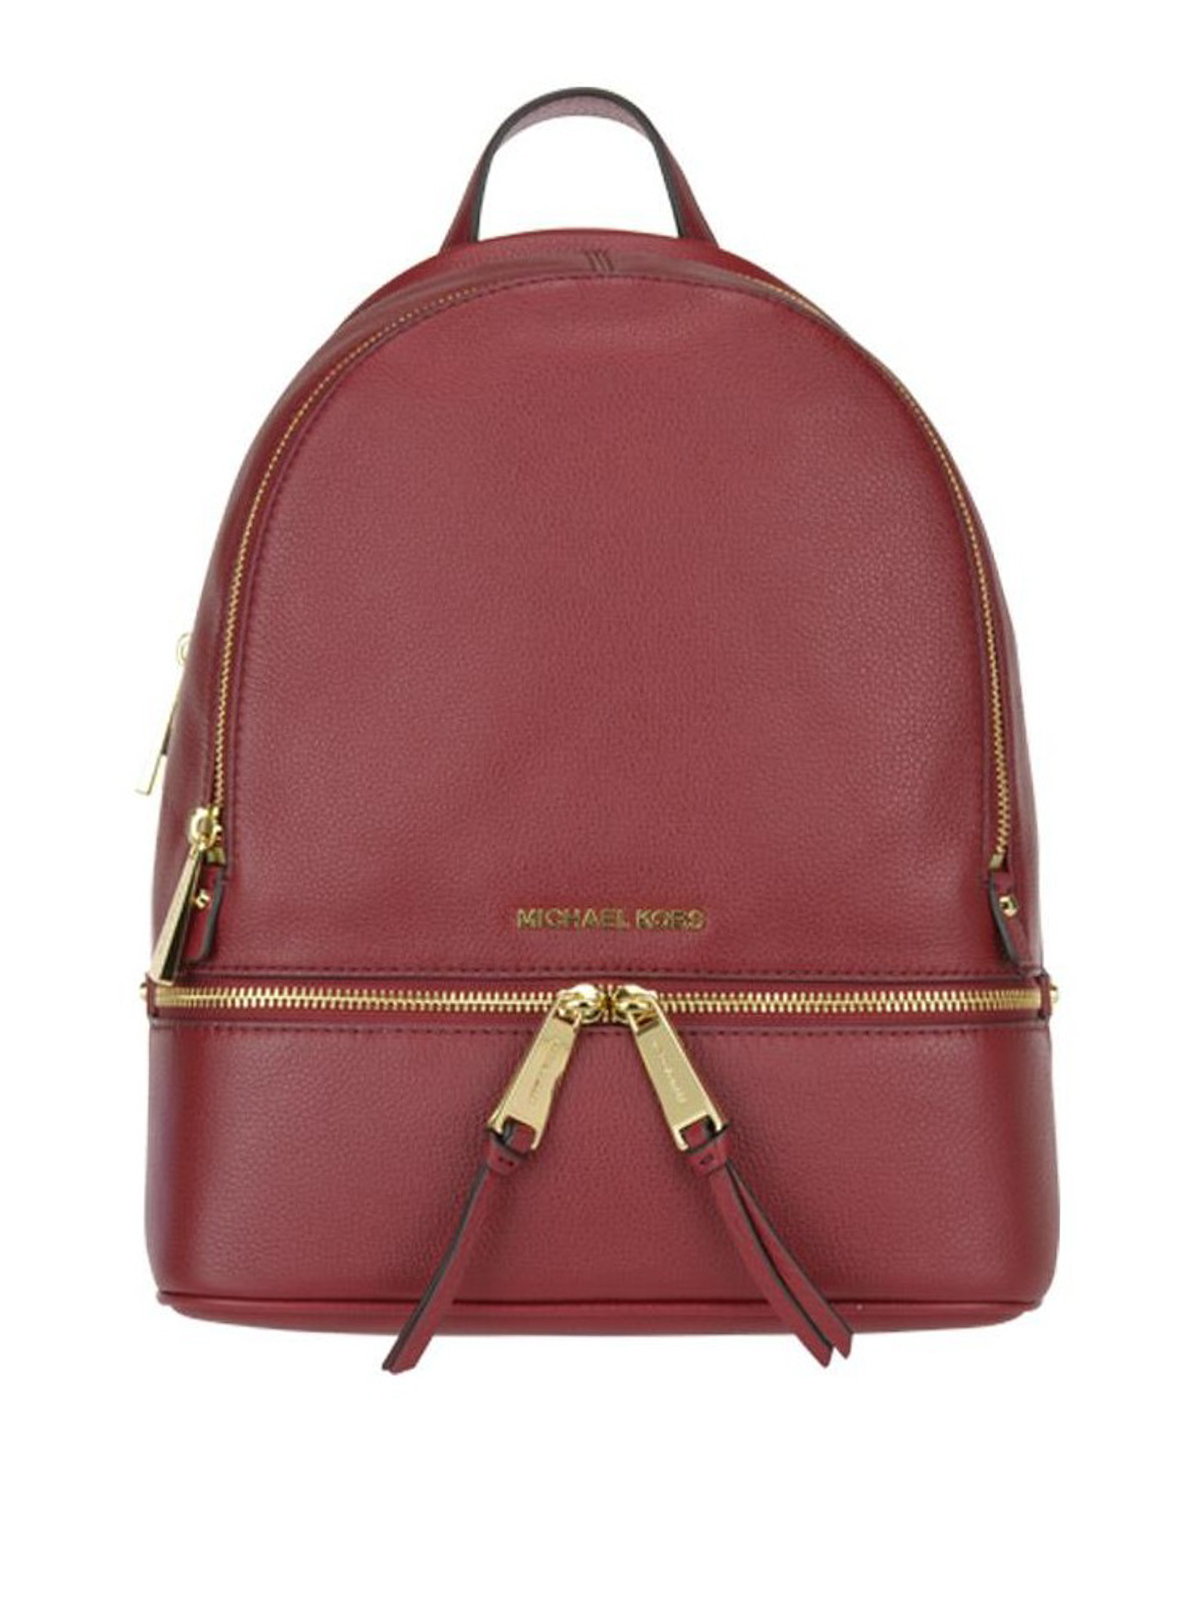 Buy the Michael Kors Red Backpack